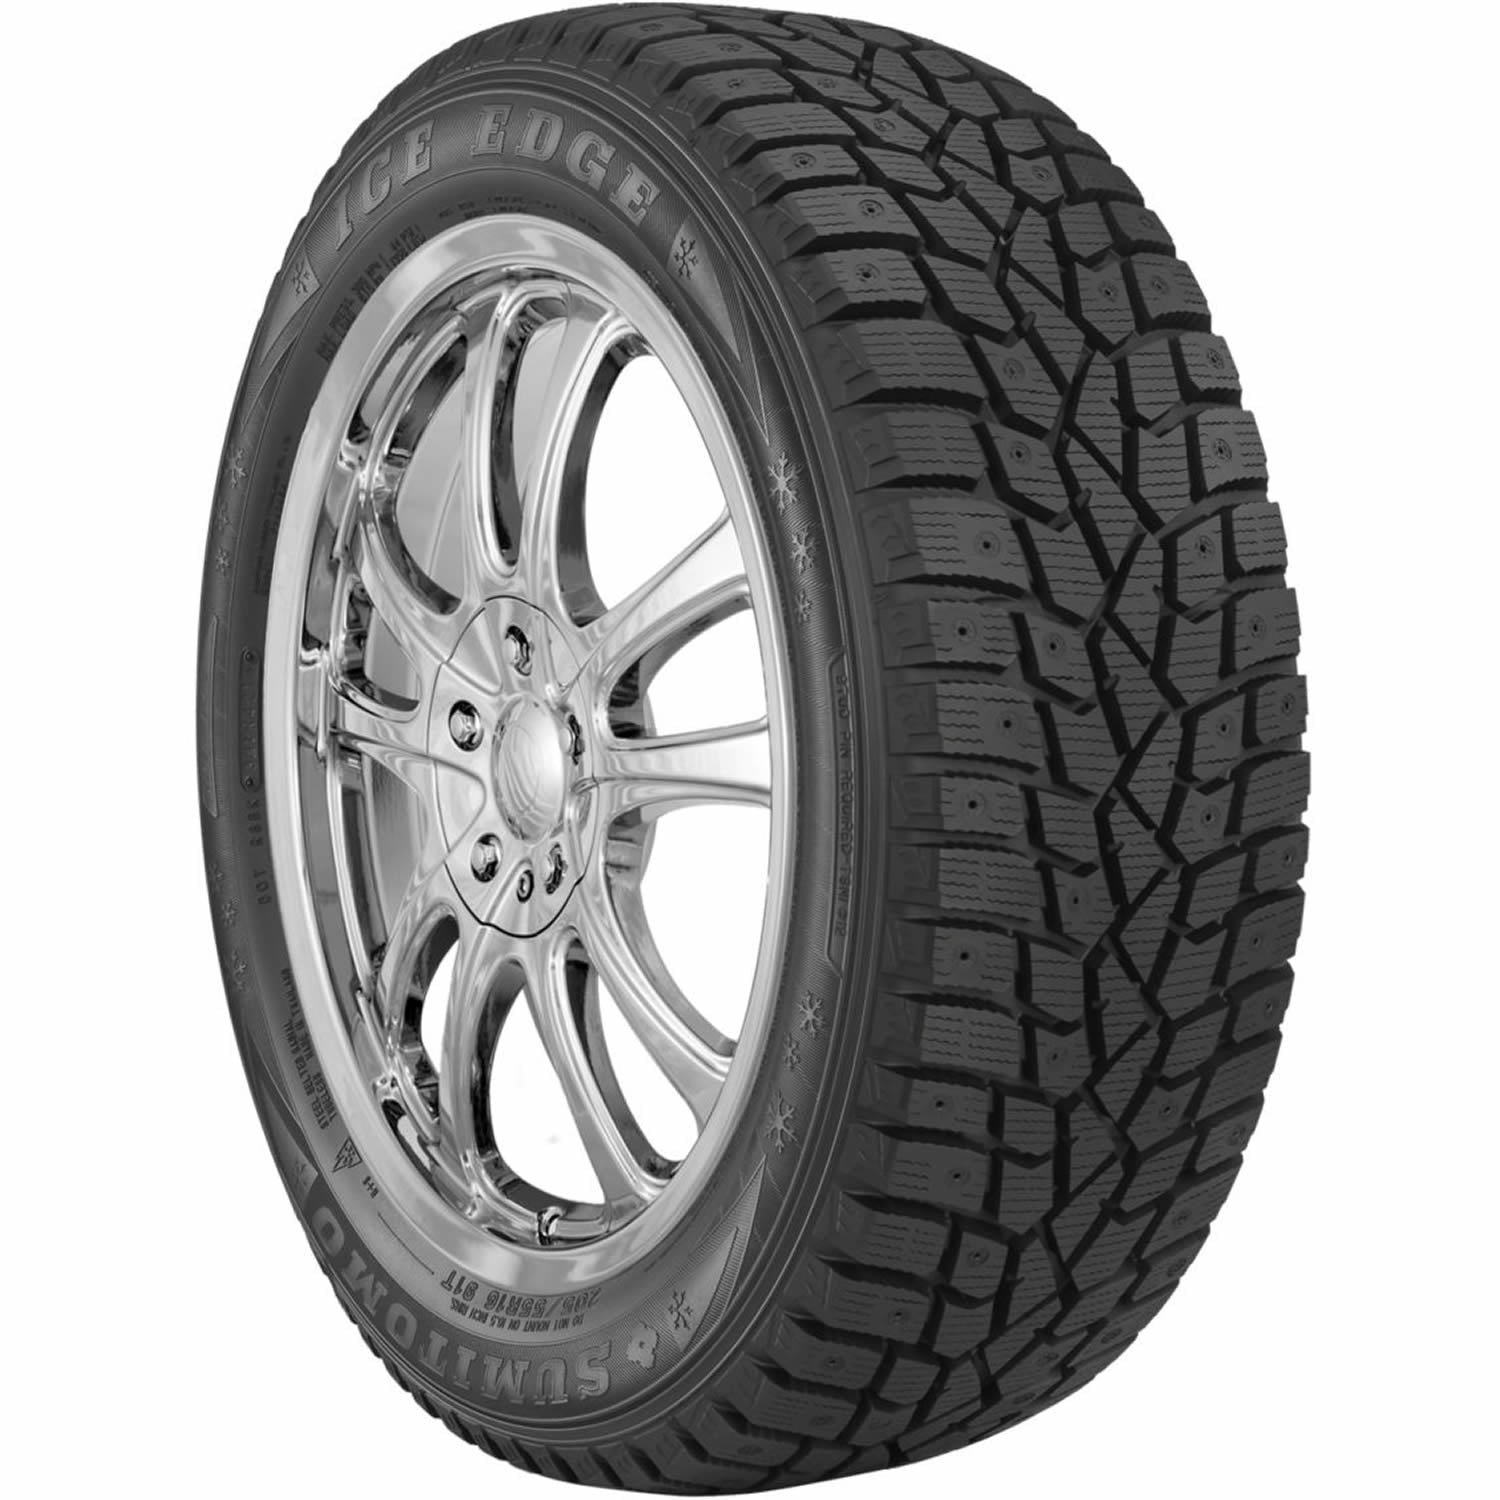 SUMITOMO ICE EDGE 225/45R17/XL (25.2X8.6R 17) Tires